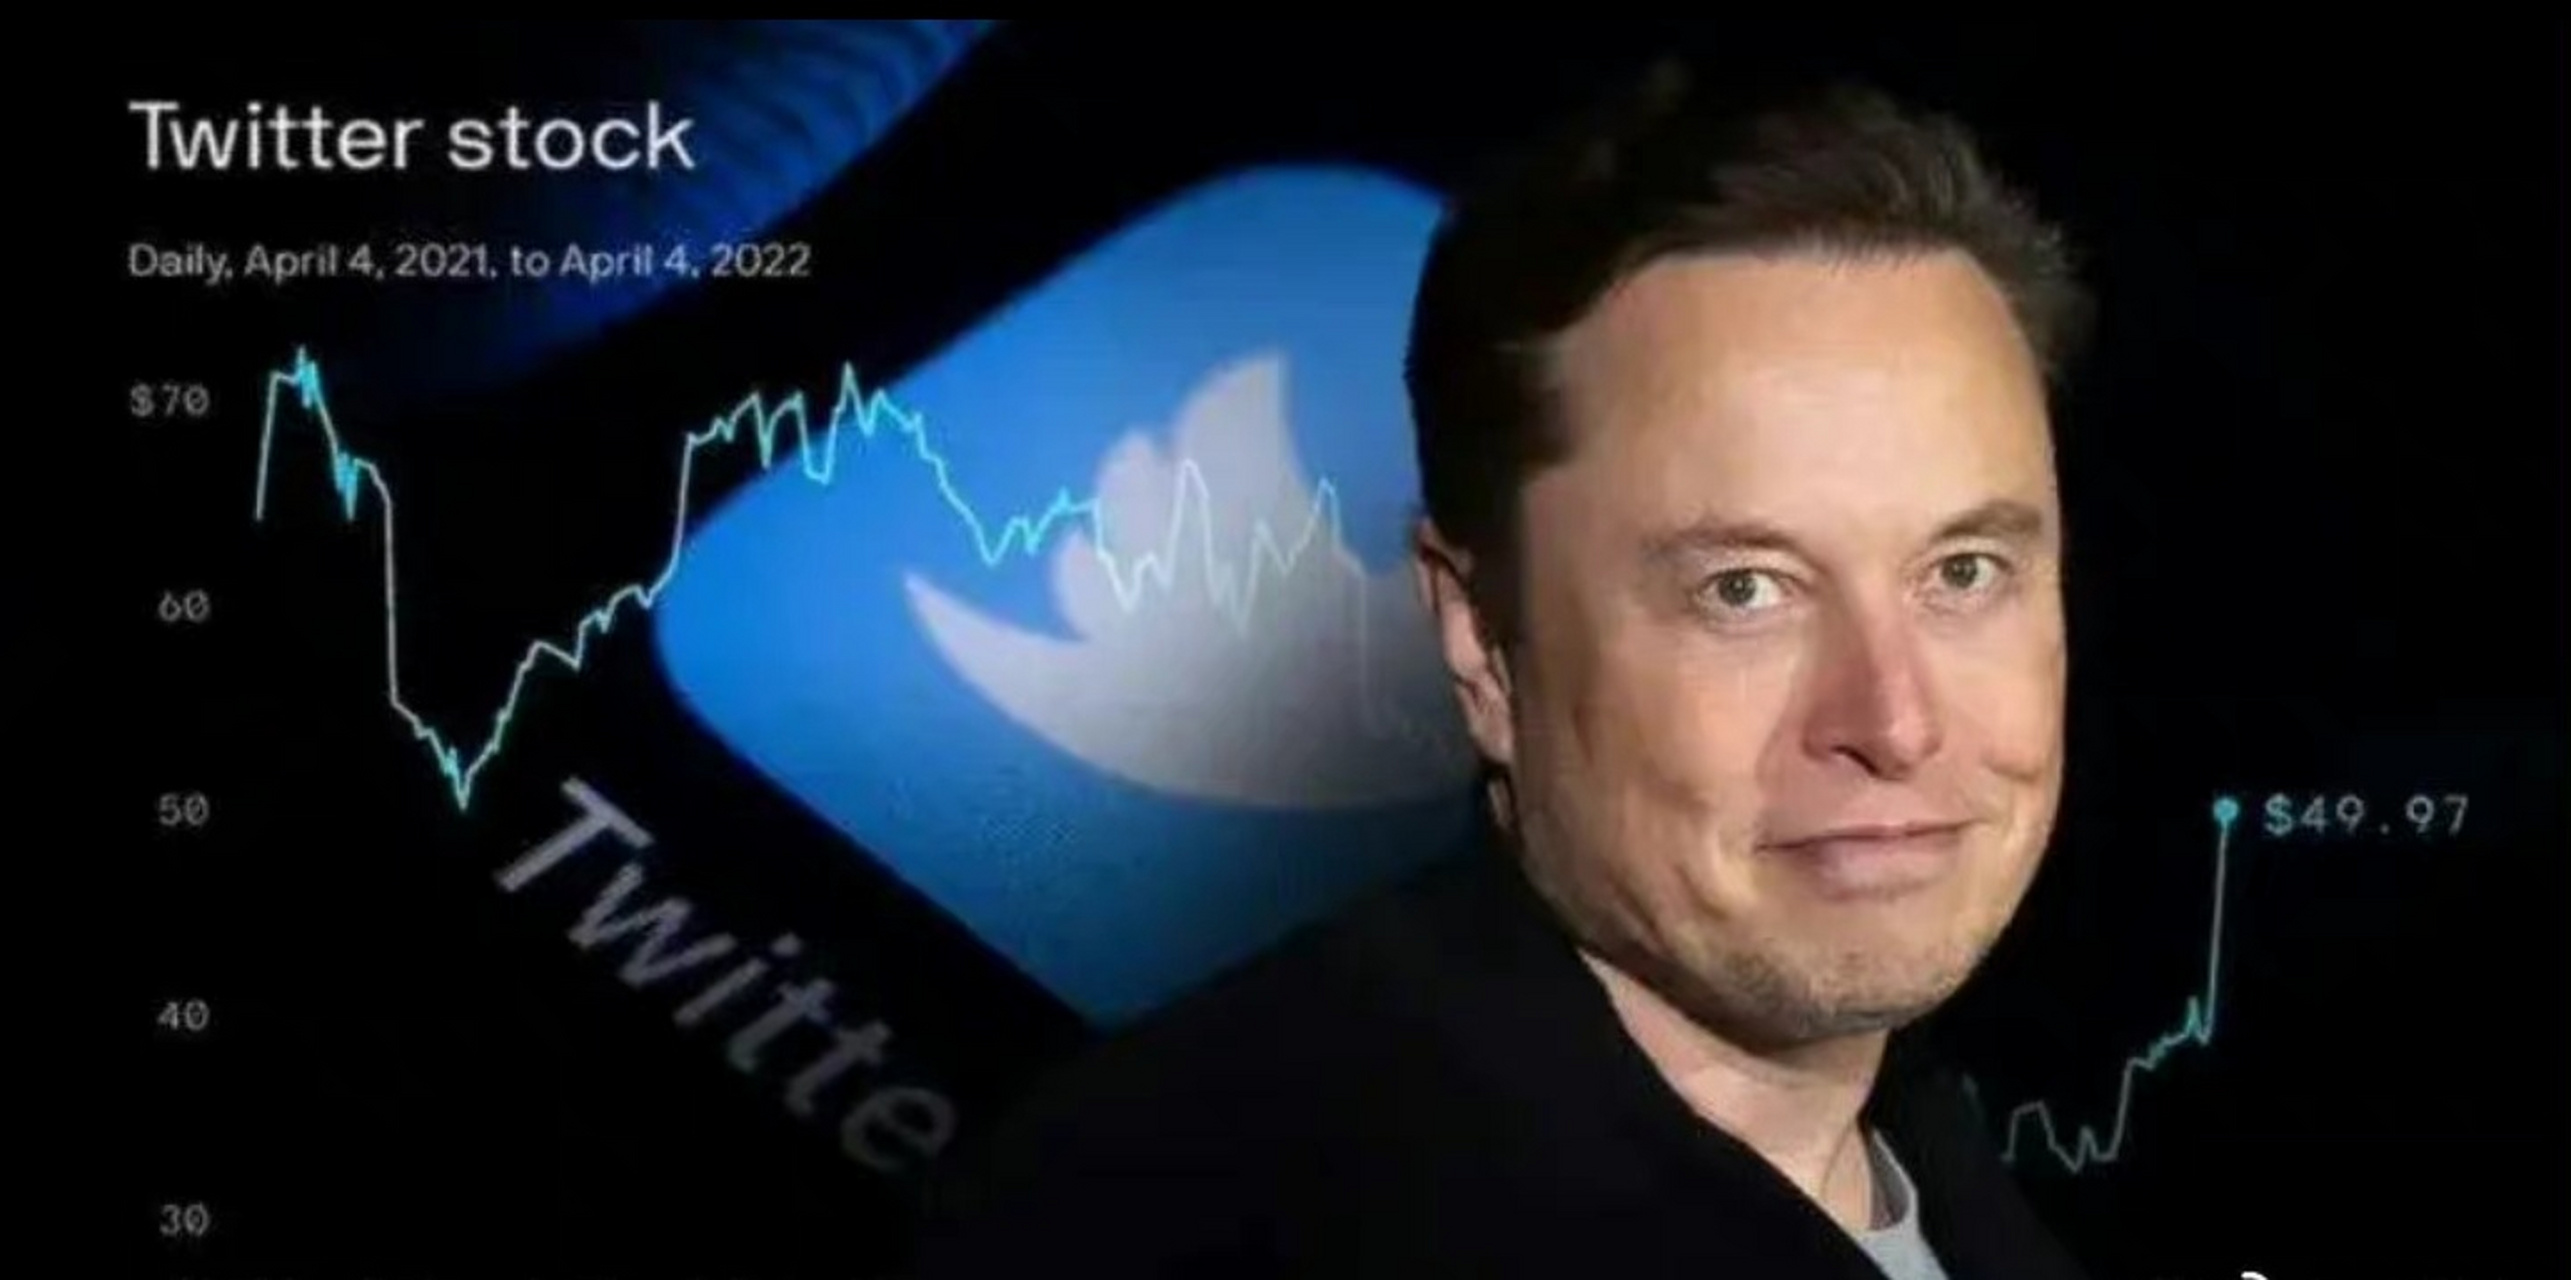 Elon Musk 报价 410 亿美元收购 Twitter